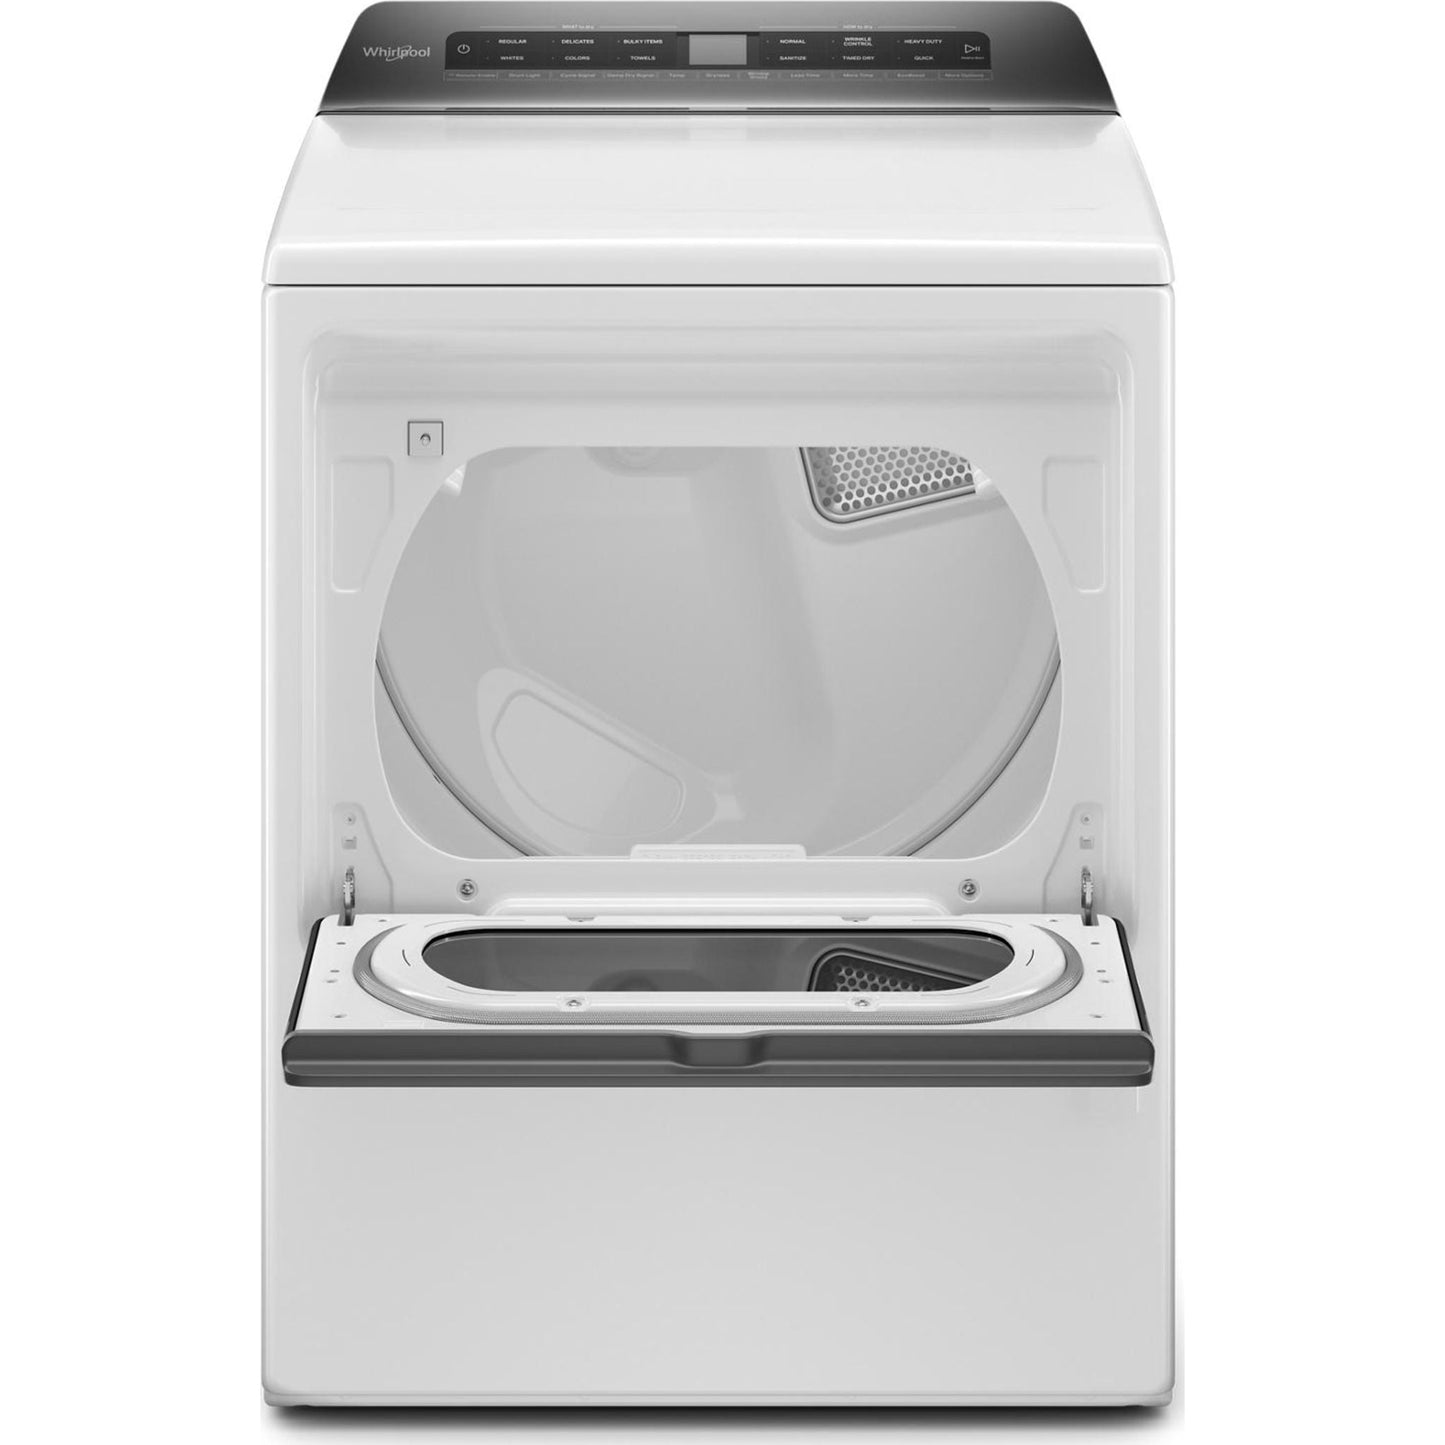 Whirlpool Gas Dryer (WGD6120HW) - White